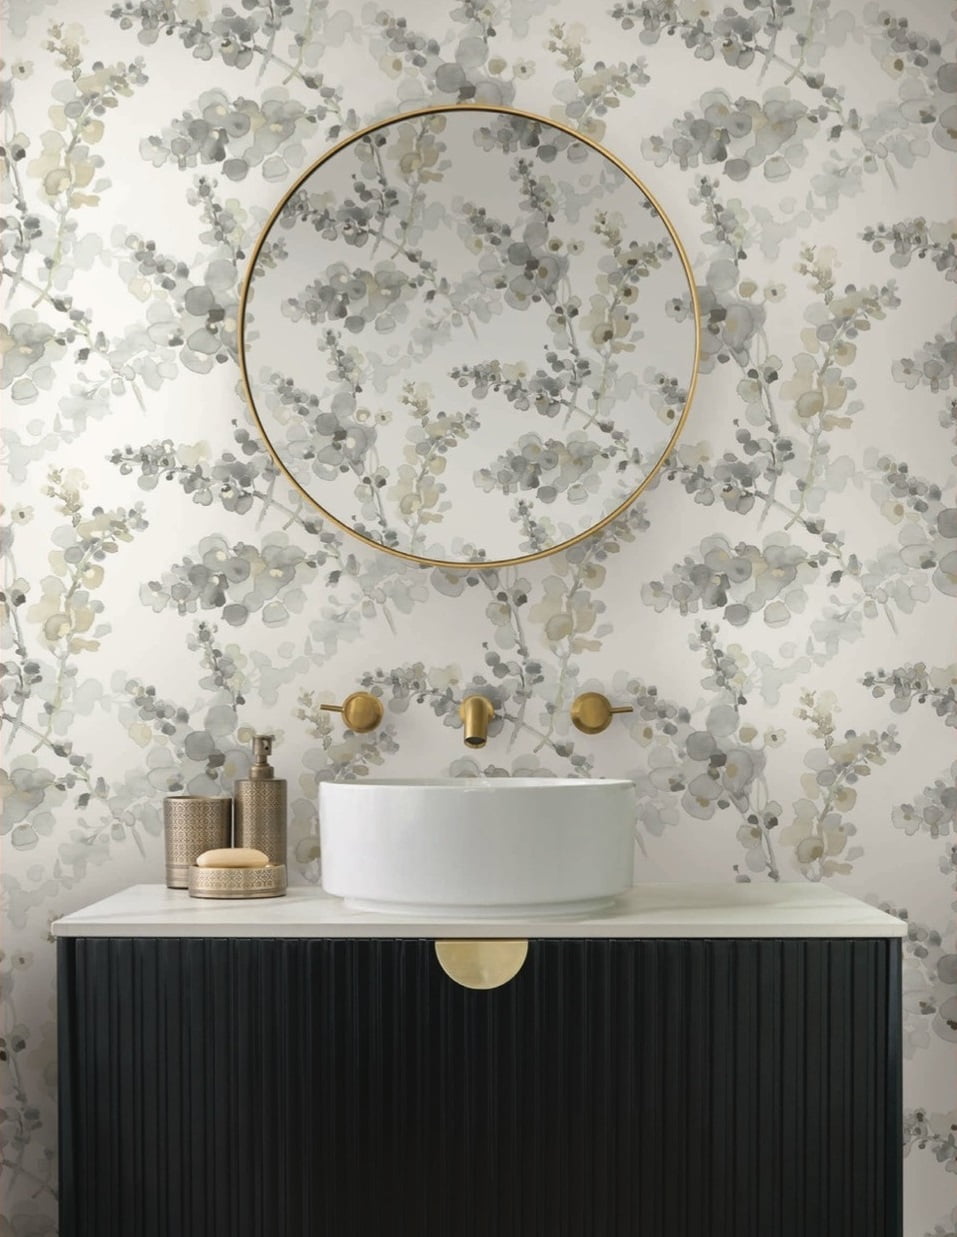 floral print wallpaper in a bathroom